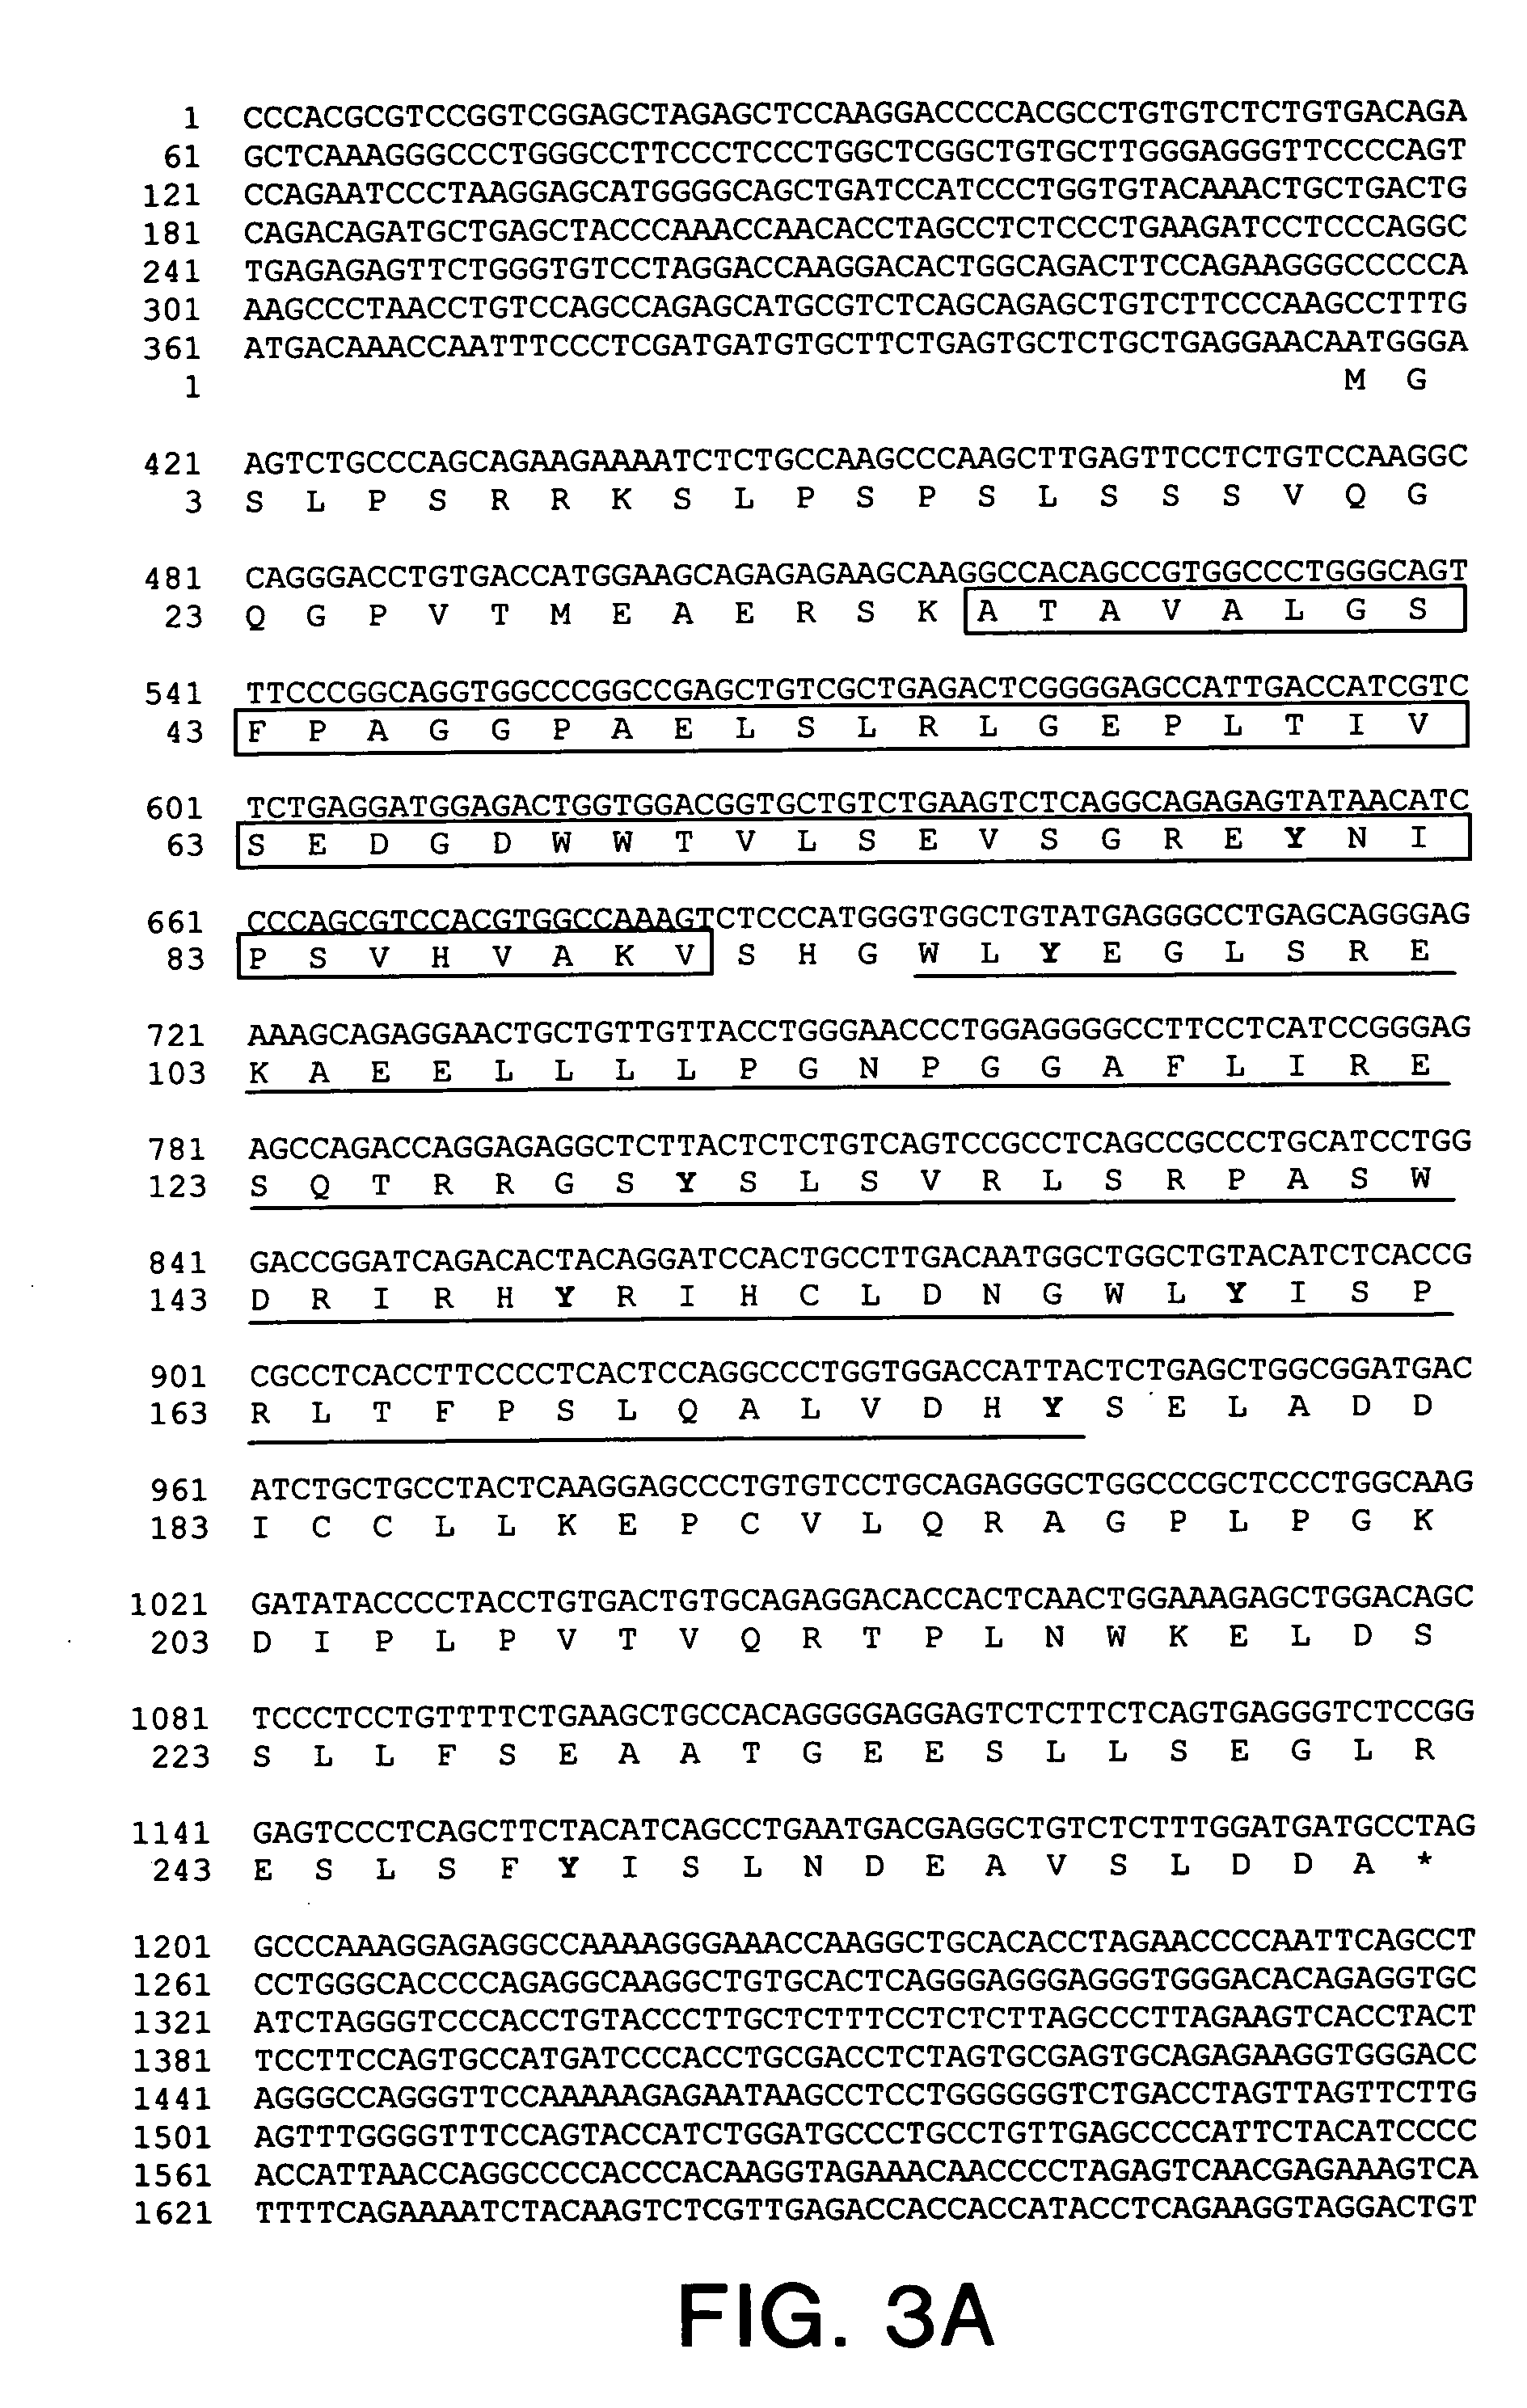 Polynucleotides encoding human SLAP-2:a novel SH2/SH3 domain-containing human SLAP homologue having immune cell-specific expression